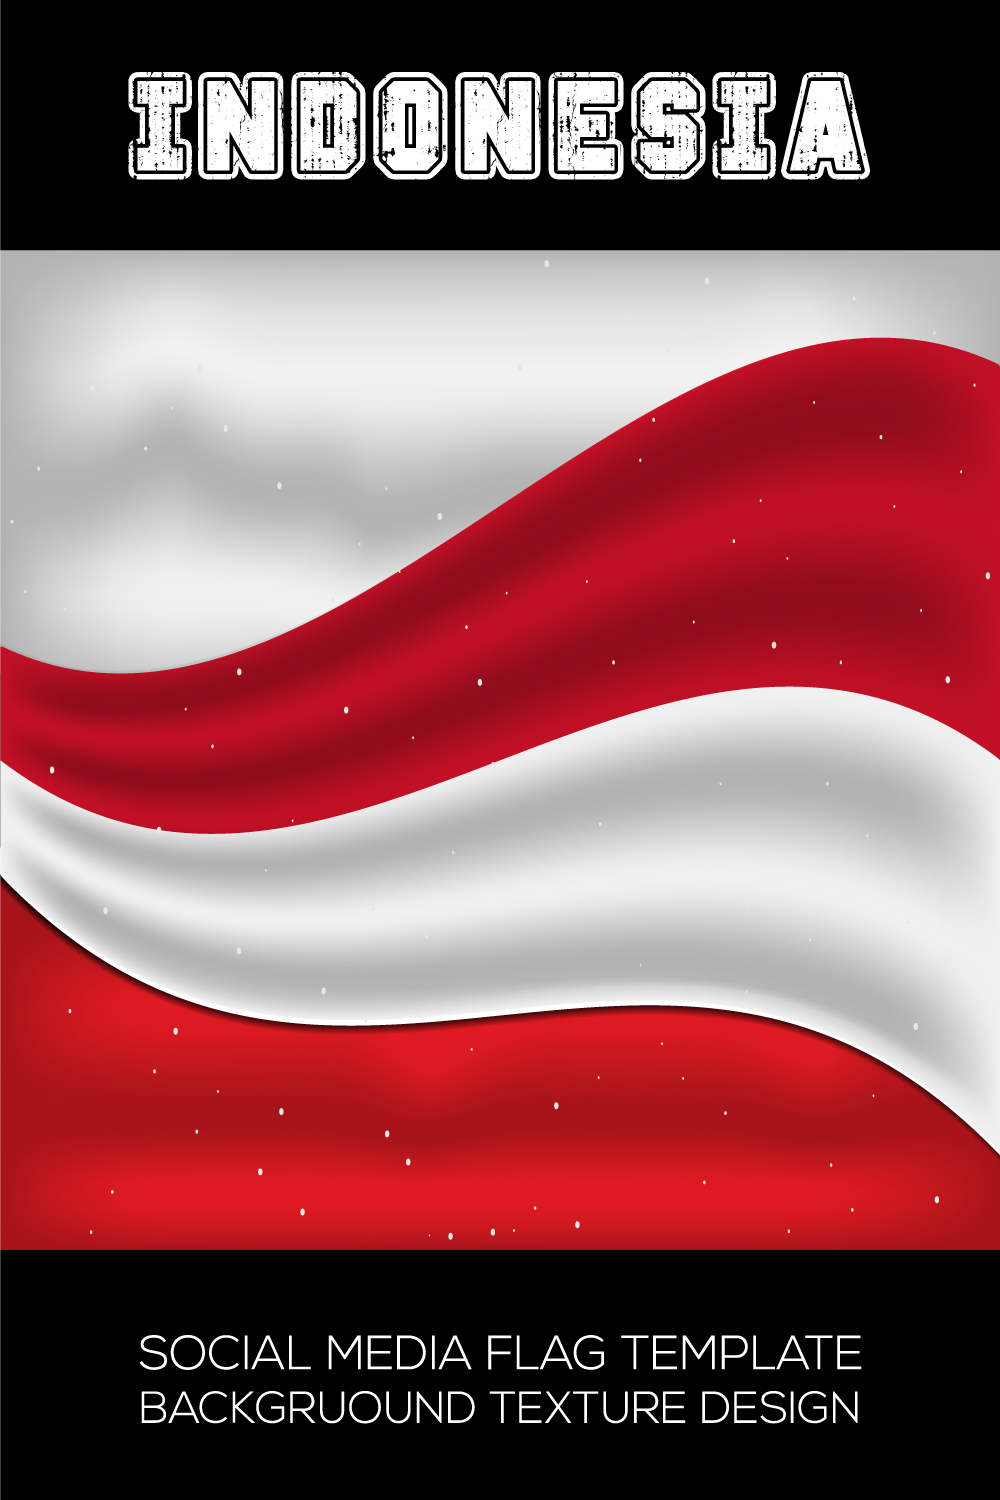 Wonderful image of the flag of Indonesia.